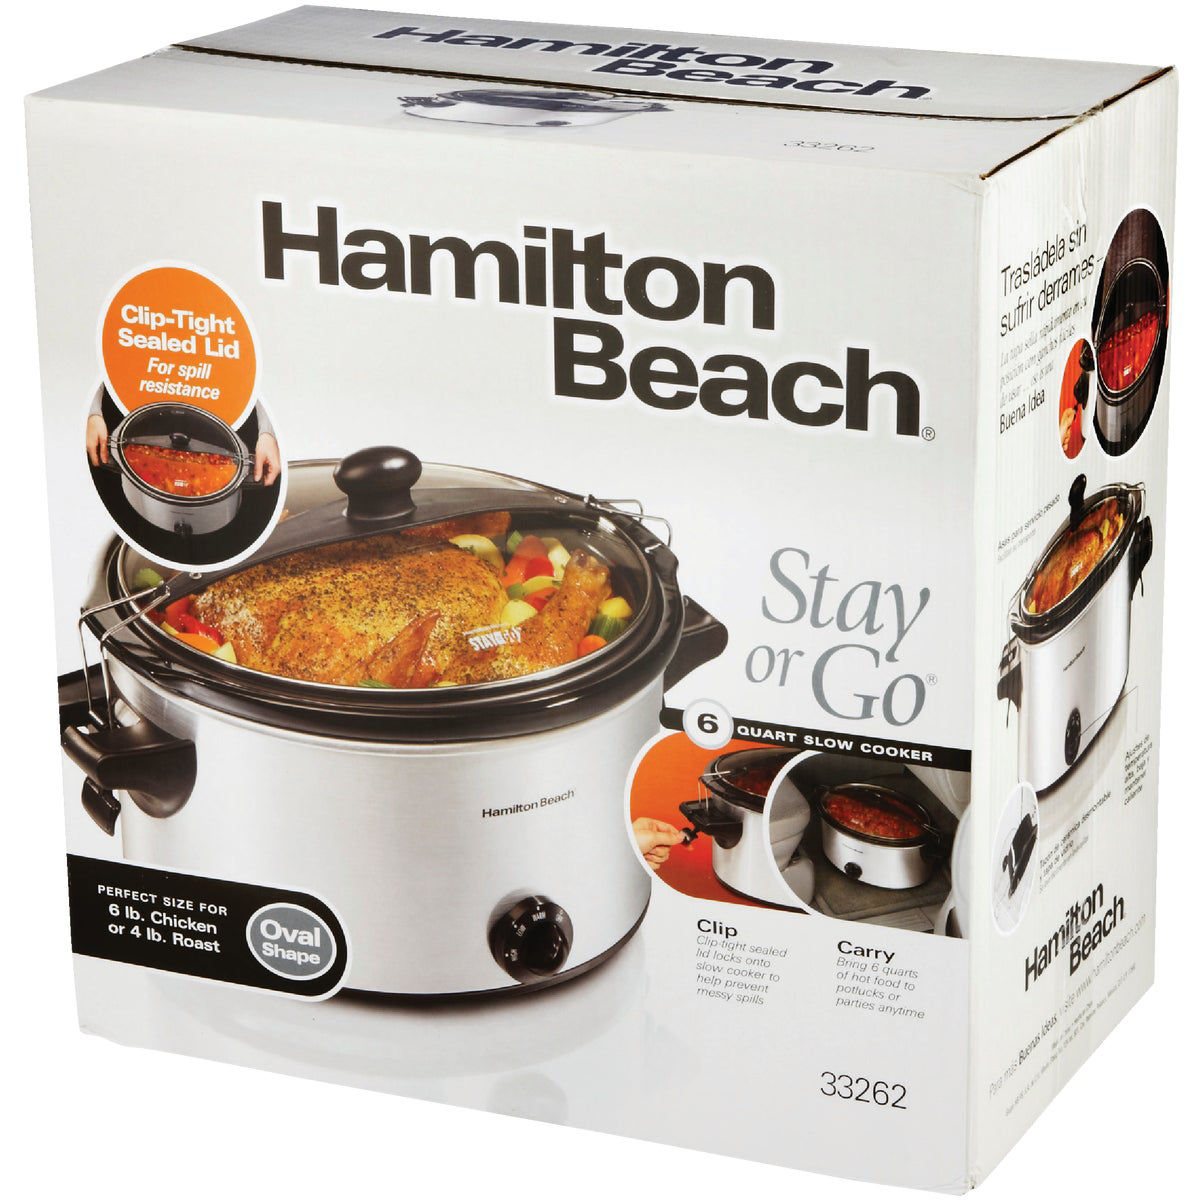 Hamilton Beach 6qt Slow Cooker - Silver : Target